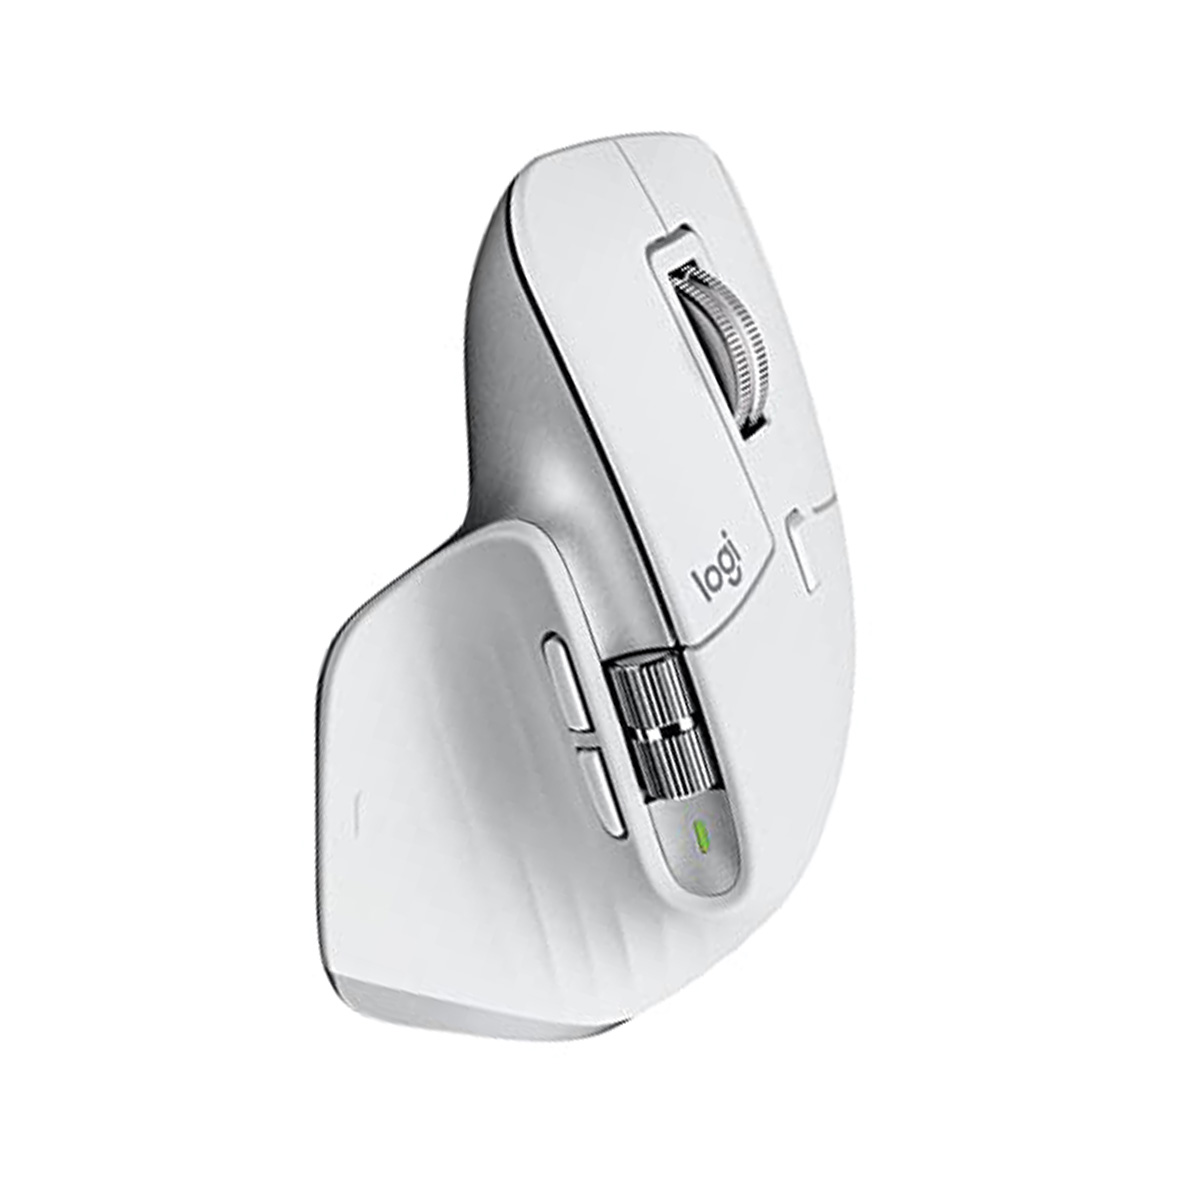 3s Ltd MX Master GrandHub Logitech Technologies Mouse –